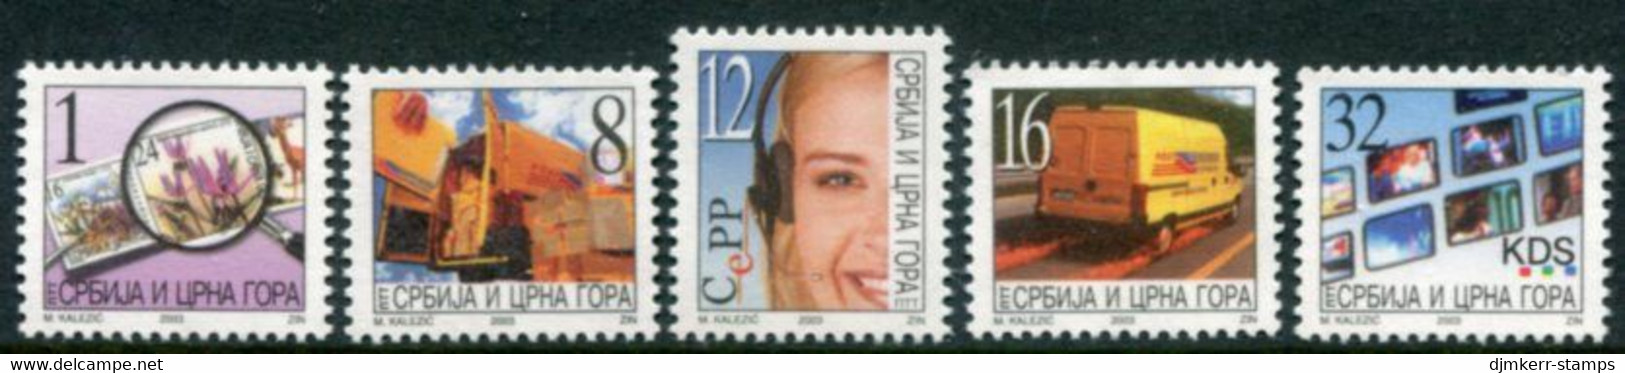 YUGOSLAVIA (Serbia & Montenegro) 2003 Definitive: Postal Services MNH / **  Michel 3133-37 - Ongebruikt